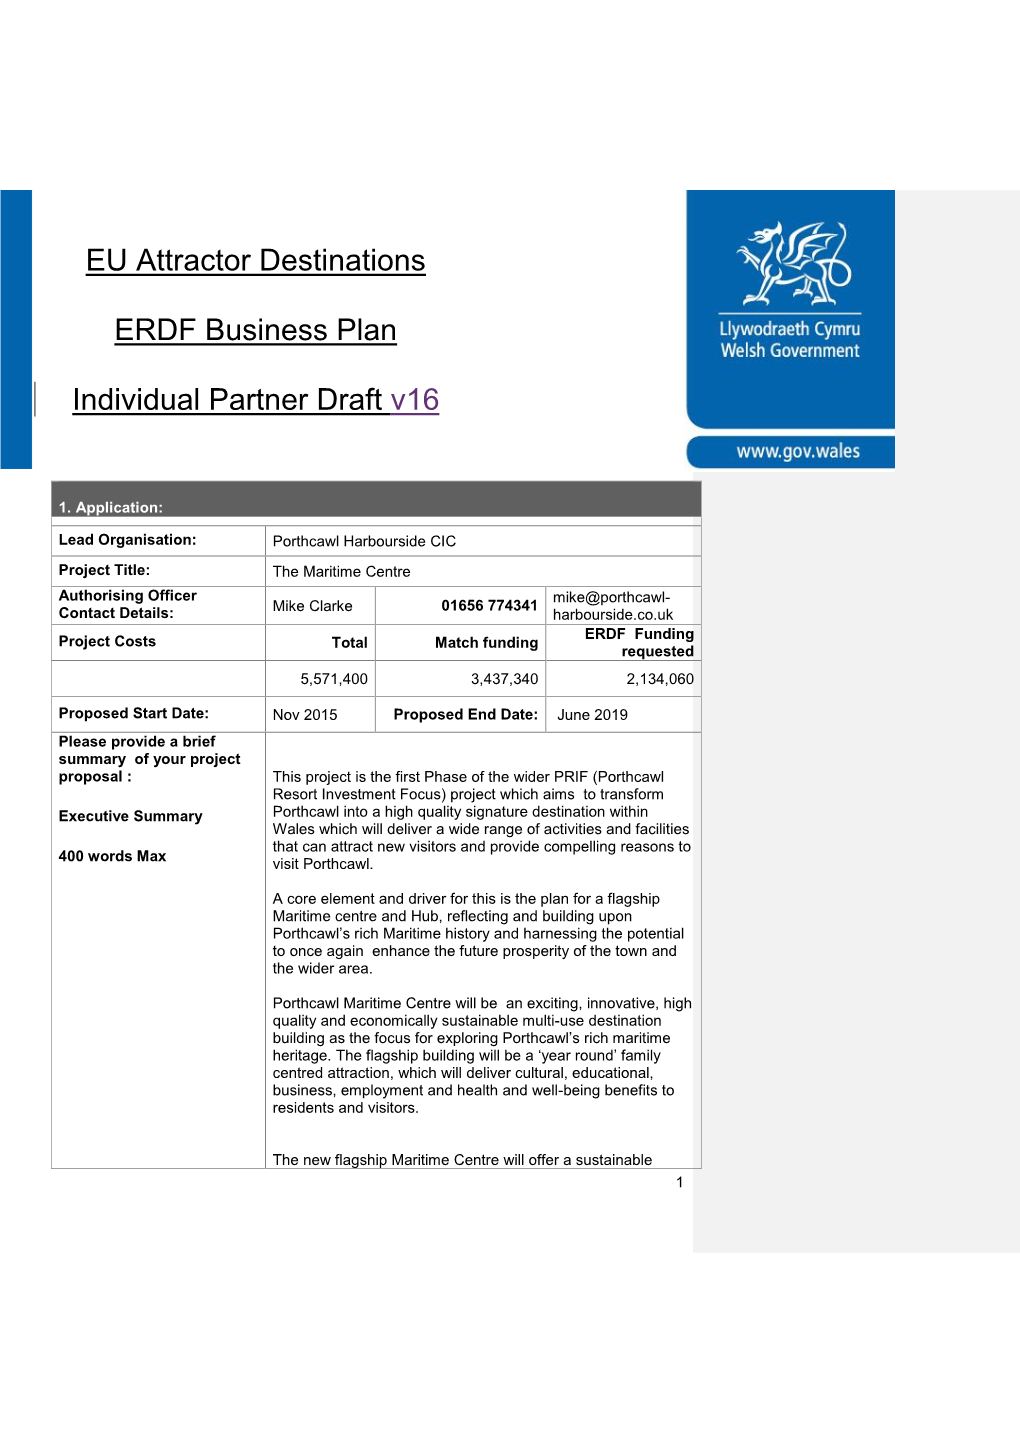 EU Attractor Destinations ERDF Business Plan Individual Partner Draft